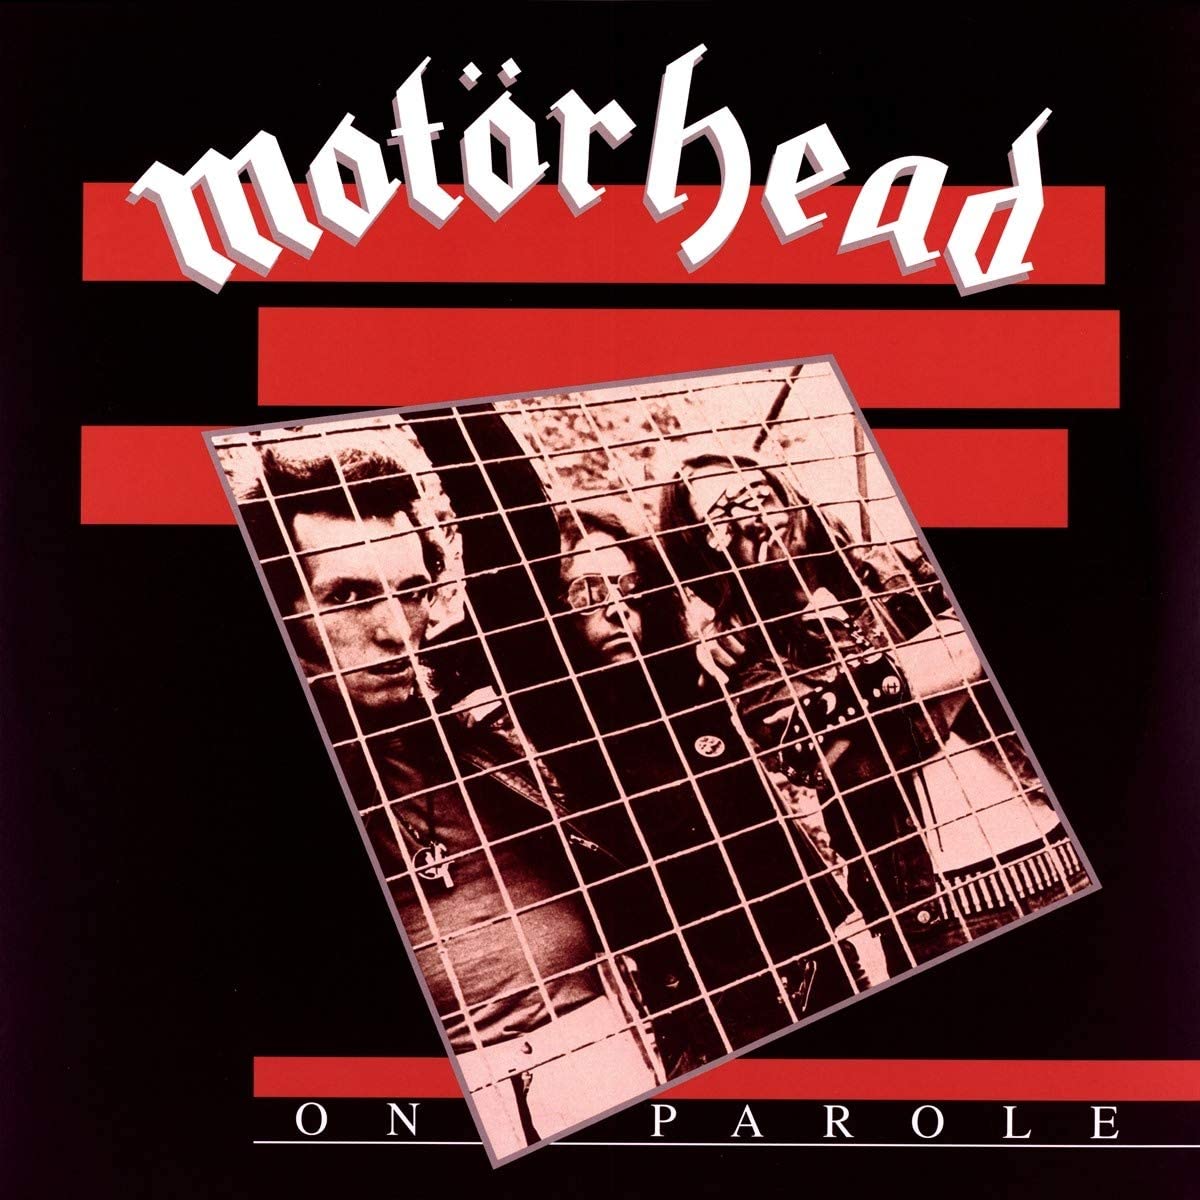 Motorhead "On Parole" 2x12" Vinyl